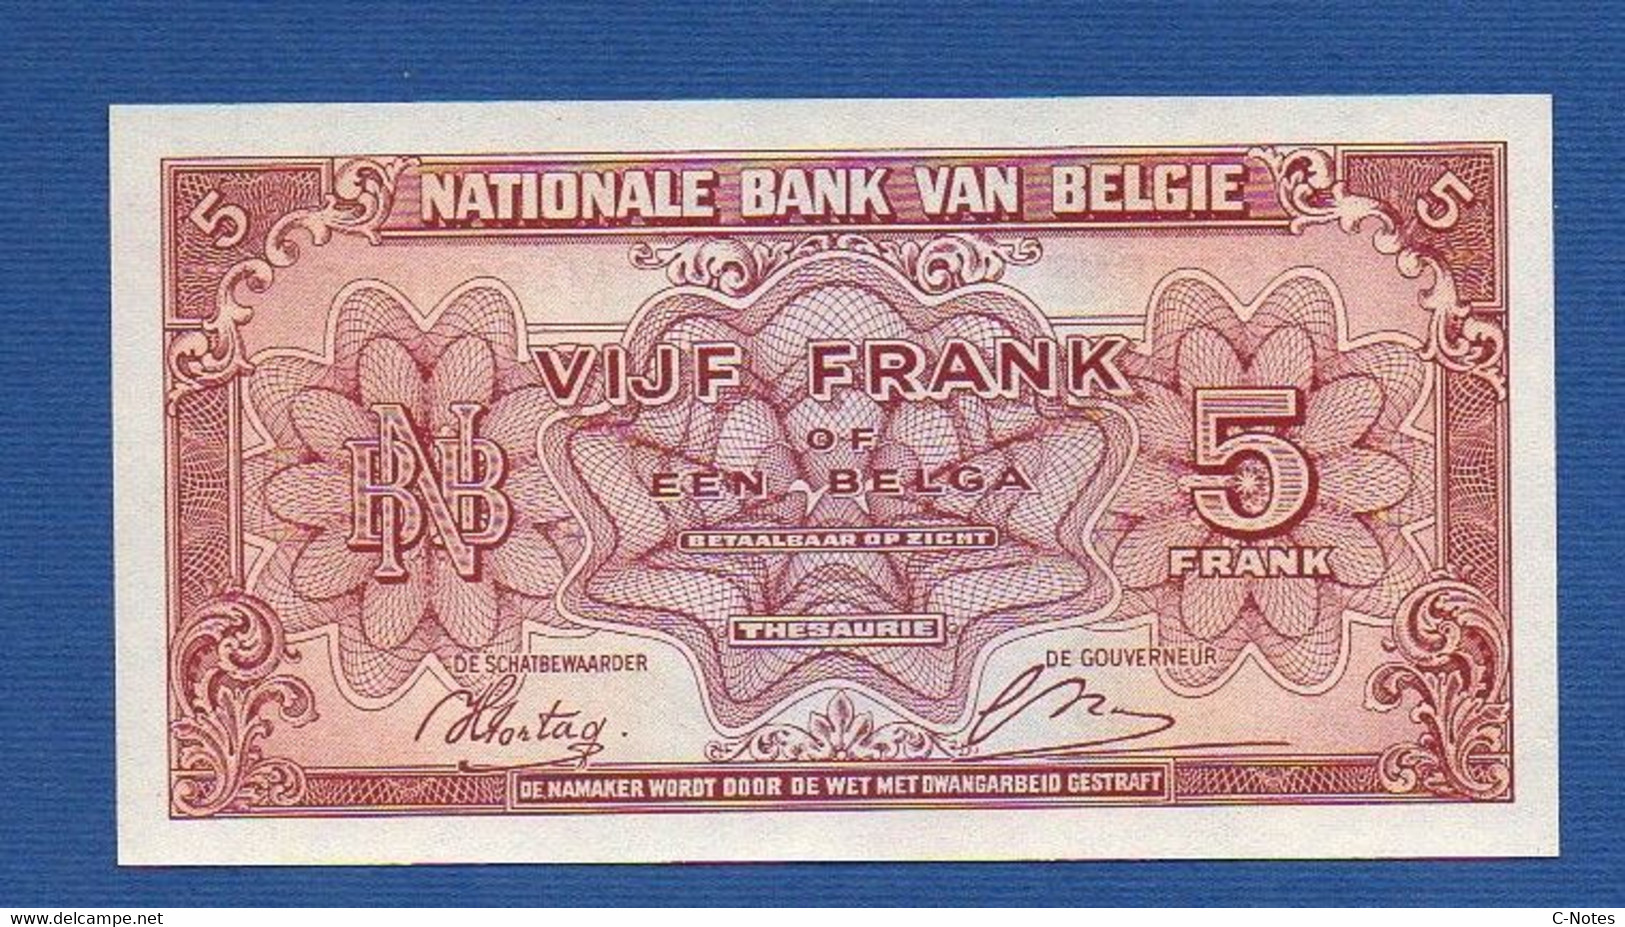 BELGIUM - P.121 - 5 Francs 1943 UNC, Serie M1 624625 - 5 Franchi